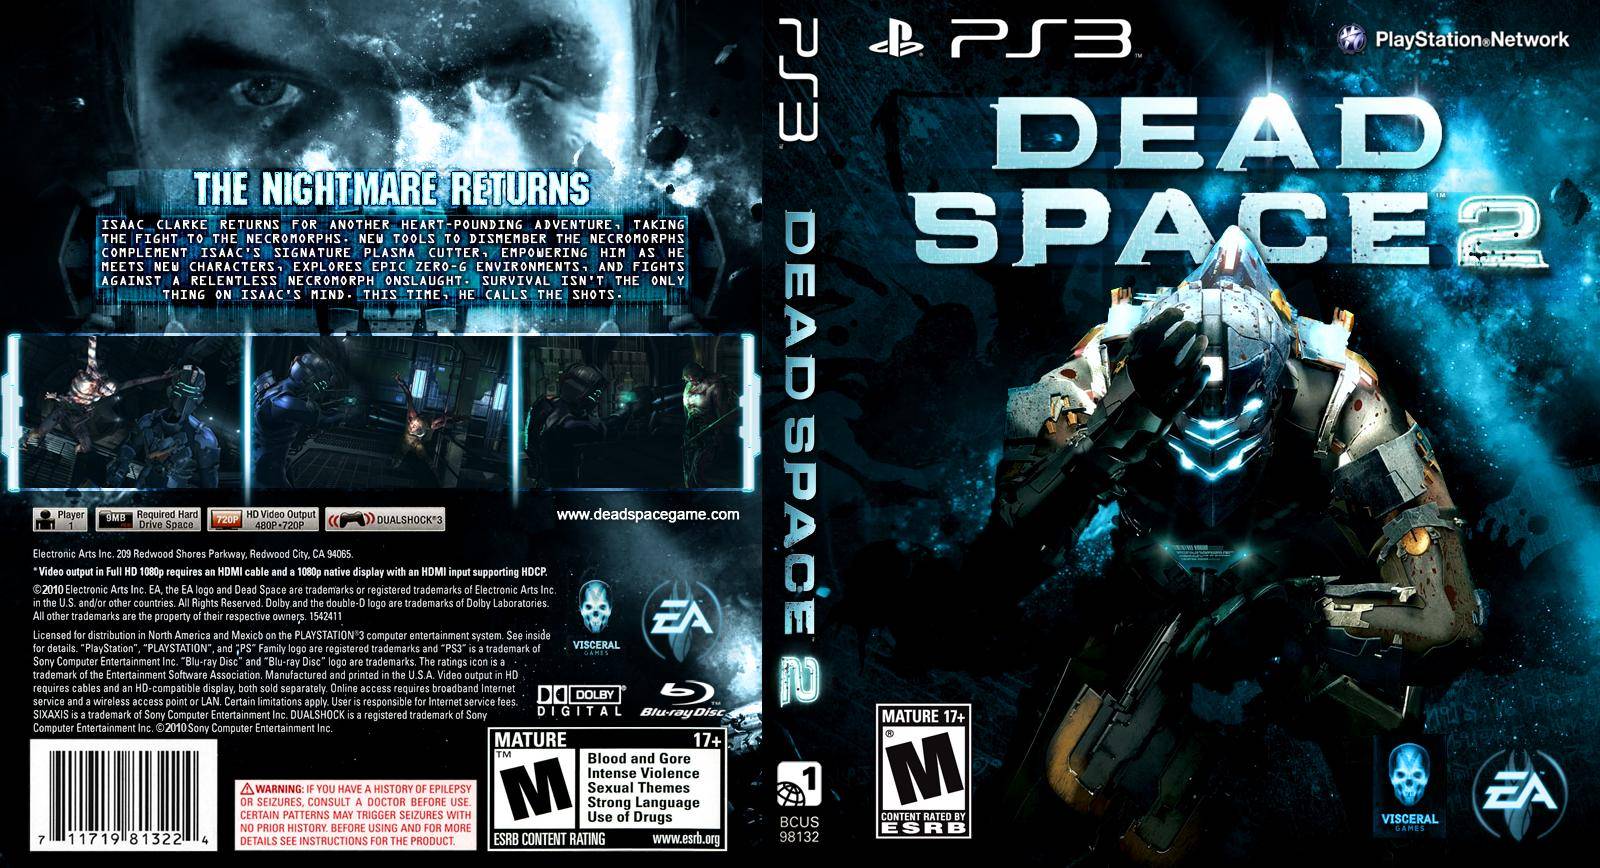 Dead Space 2 Wallpaper and Box Art in HD « GamingBolt.com: Video